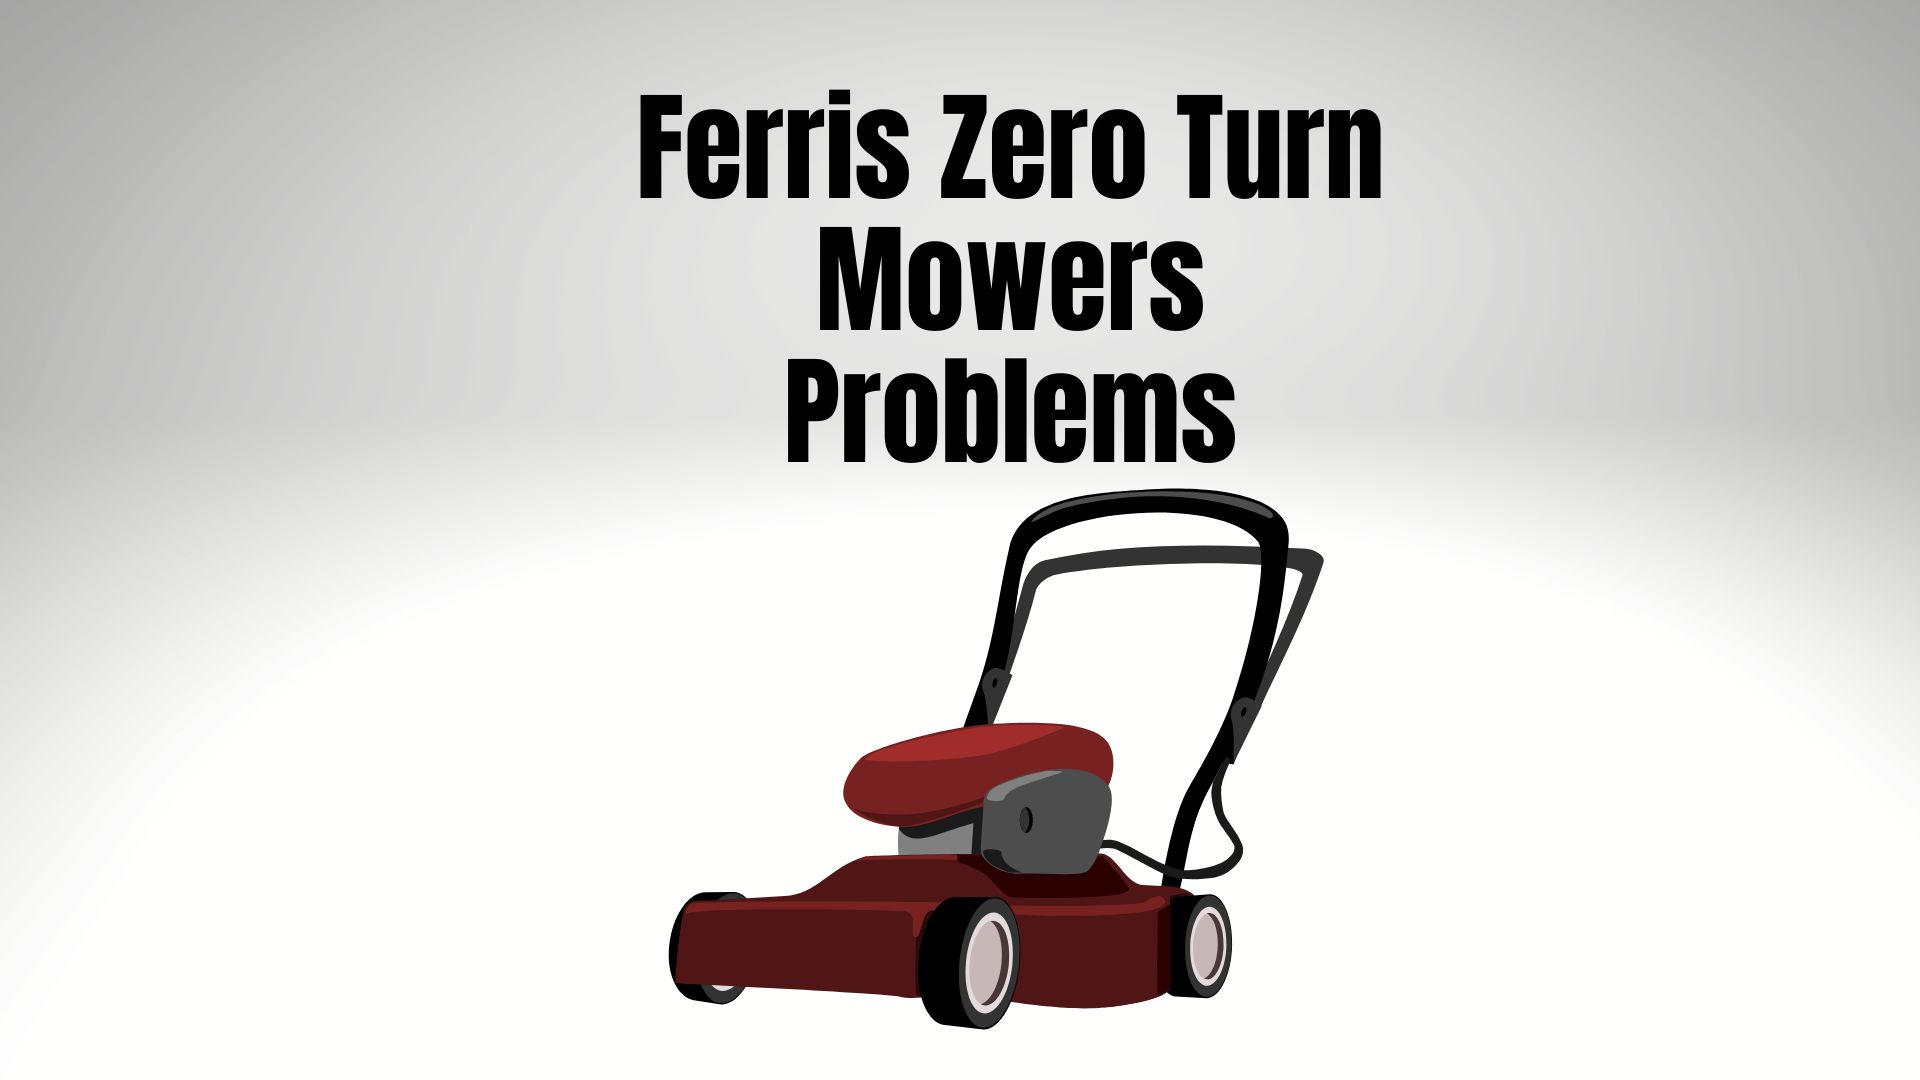 Ferris Zero Turn Mowers Problems